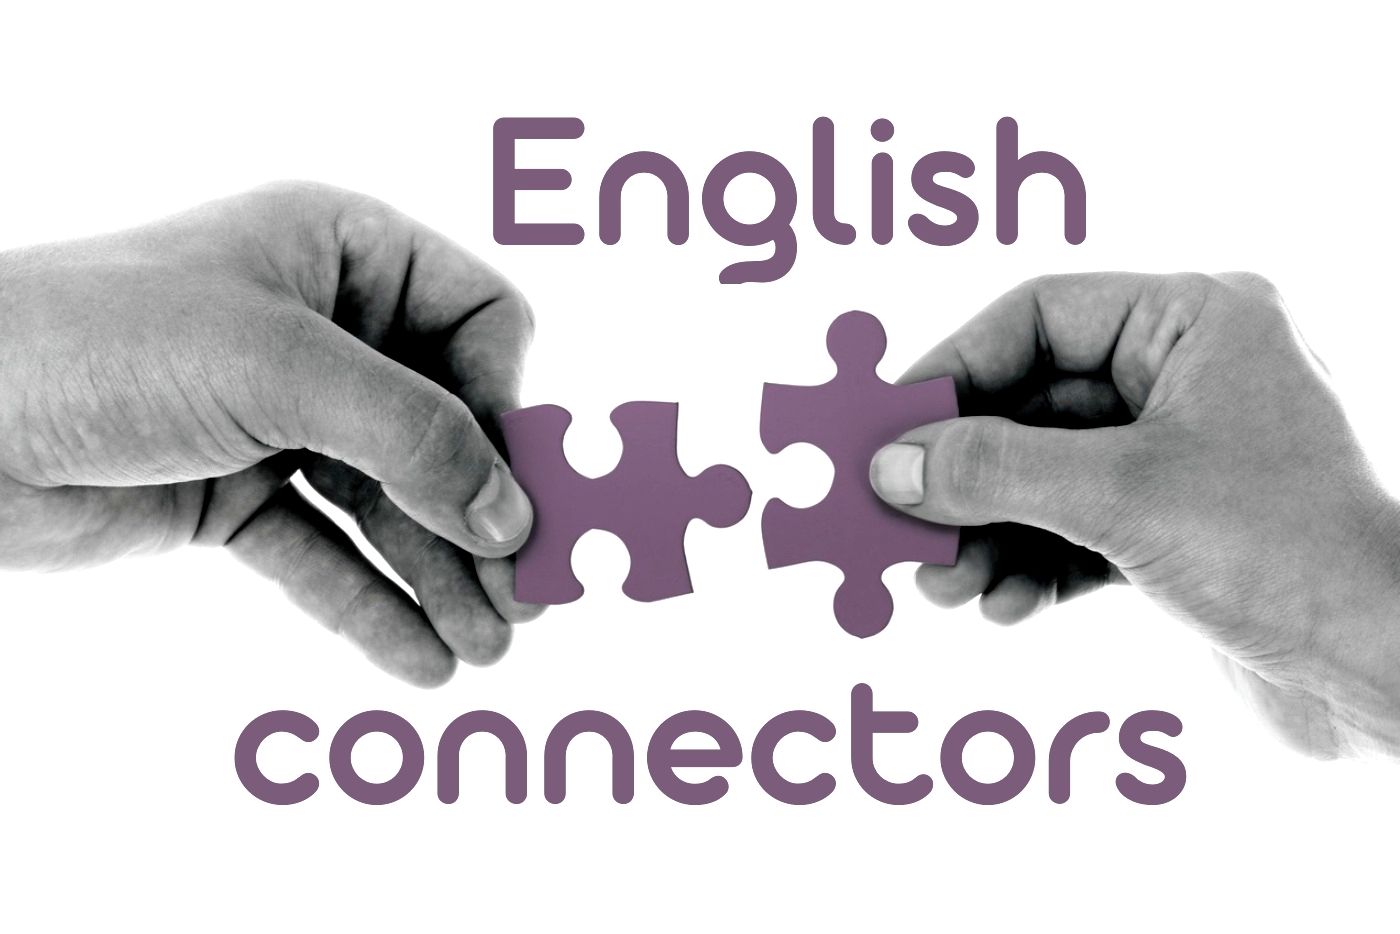 english-connectors-fast-english-oktat-kft-c-ges-angol